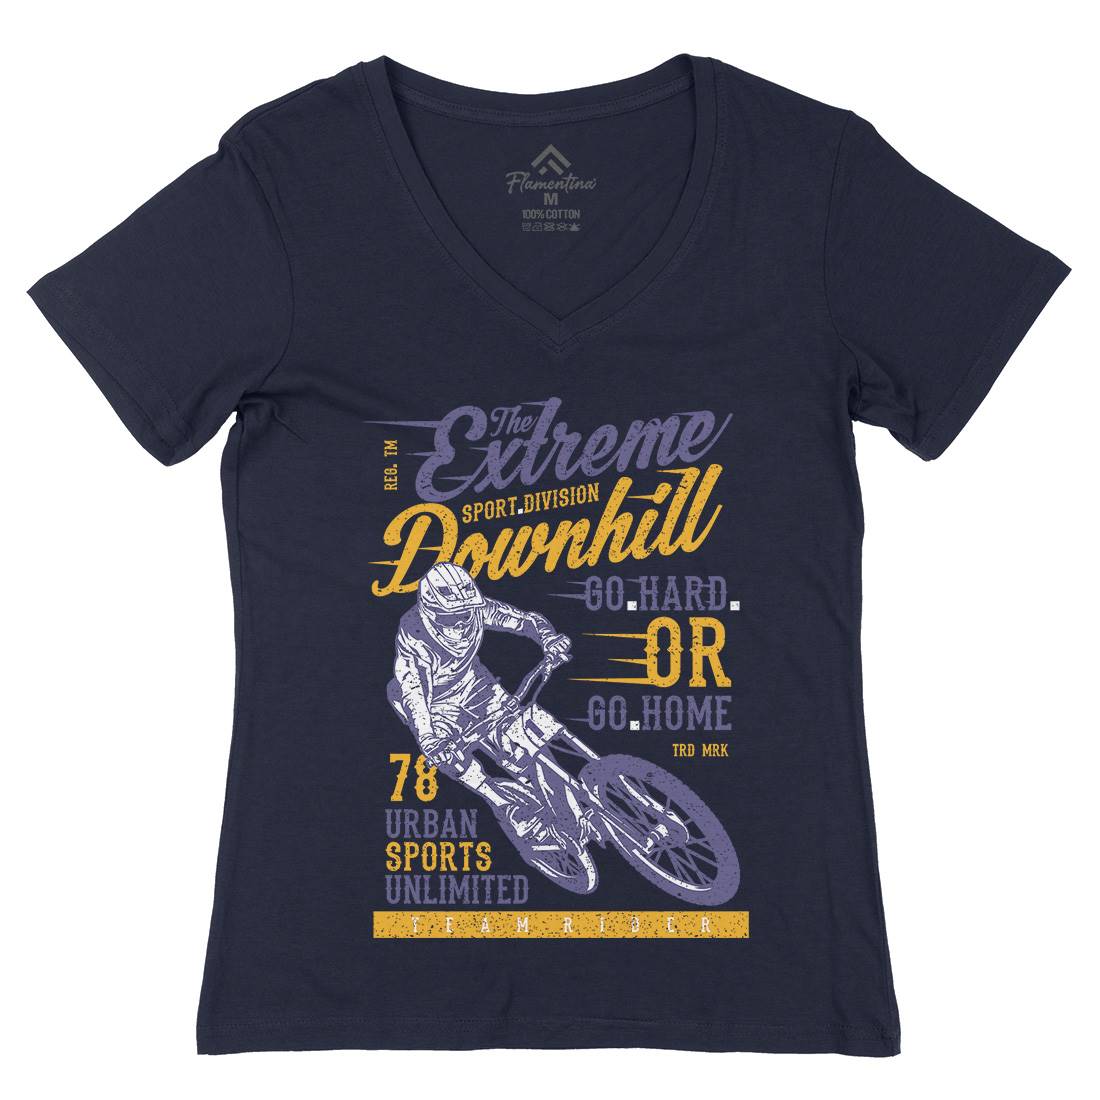 Extreme Downhill Womens Organic V-Neck T-Shirt Bikes A772